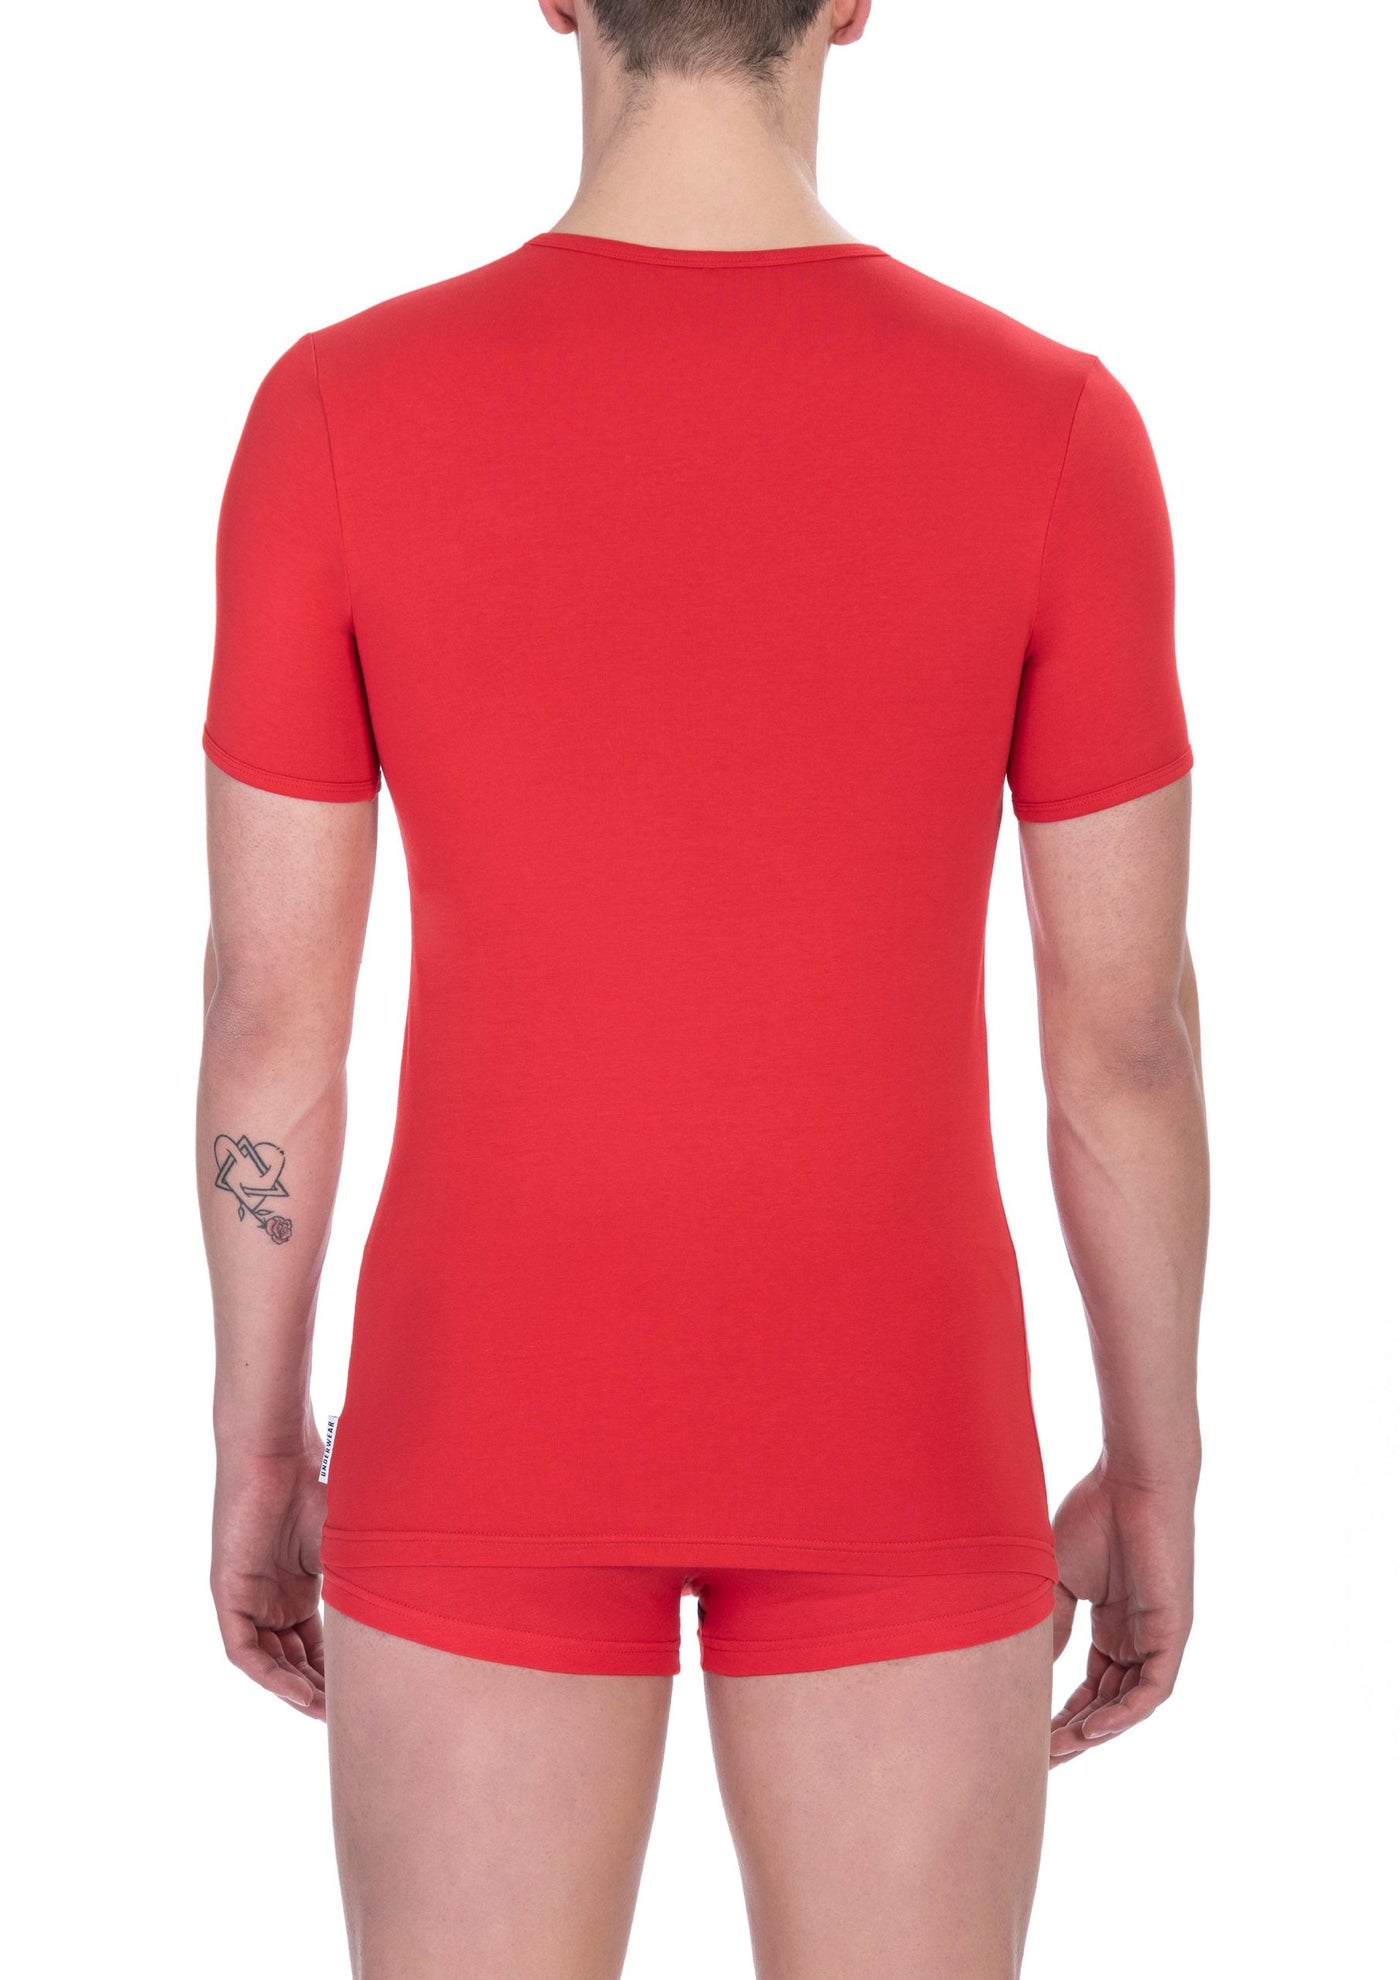 Bikkembergs Red Cotton T-Shirt